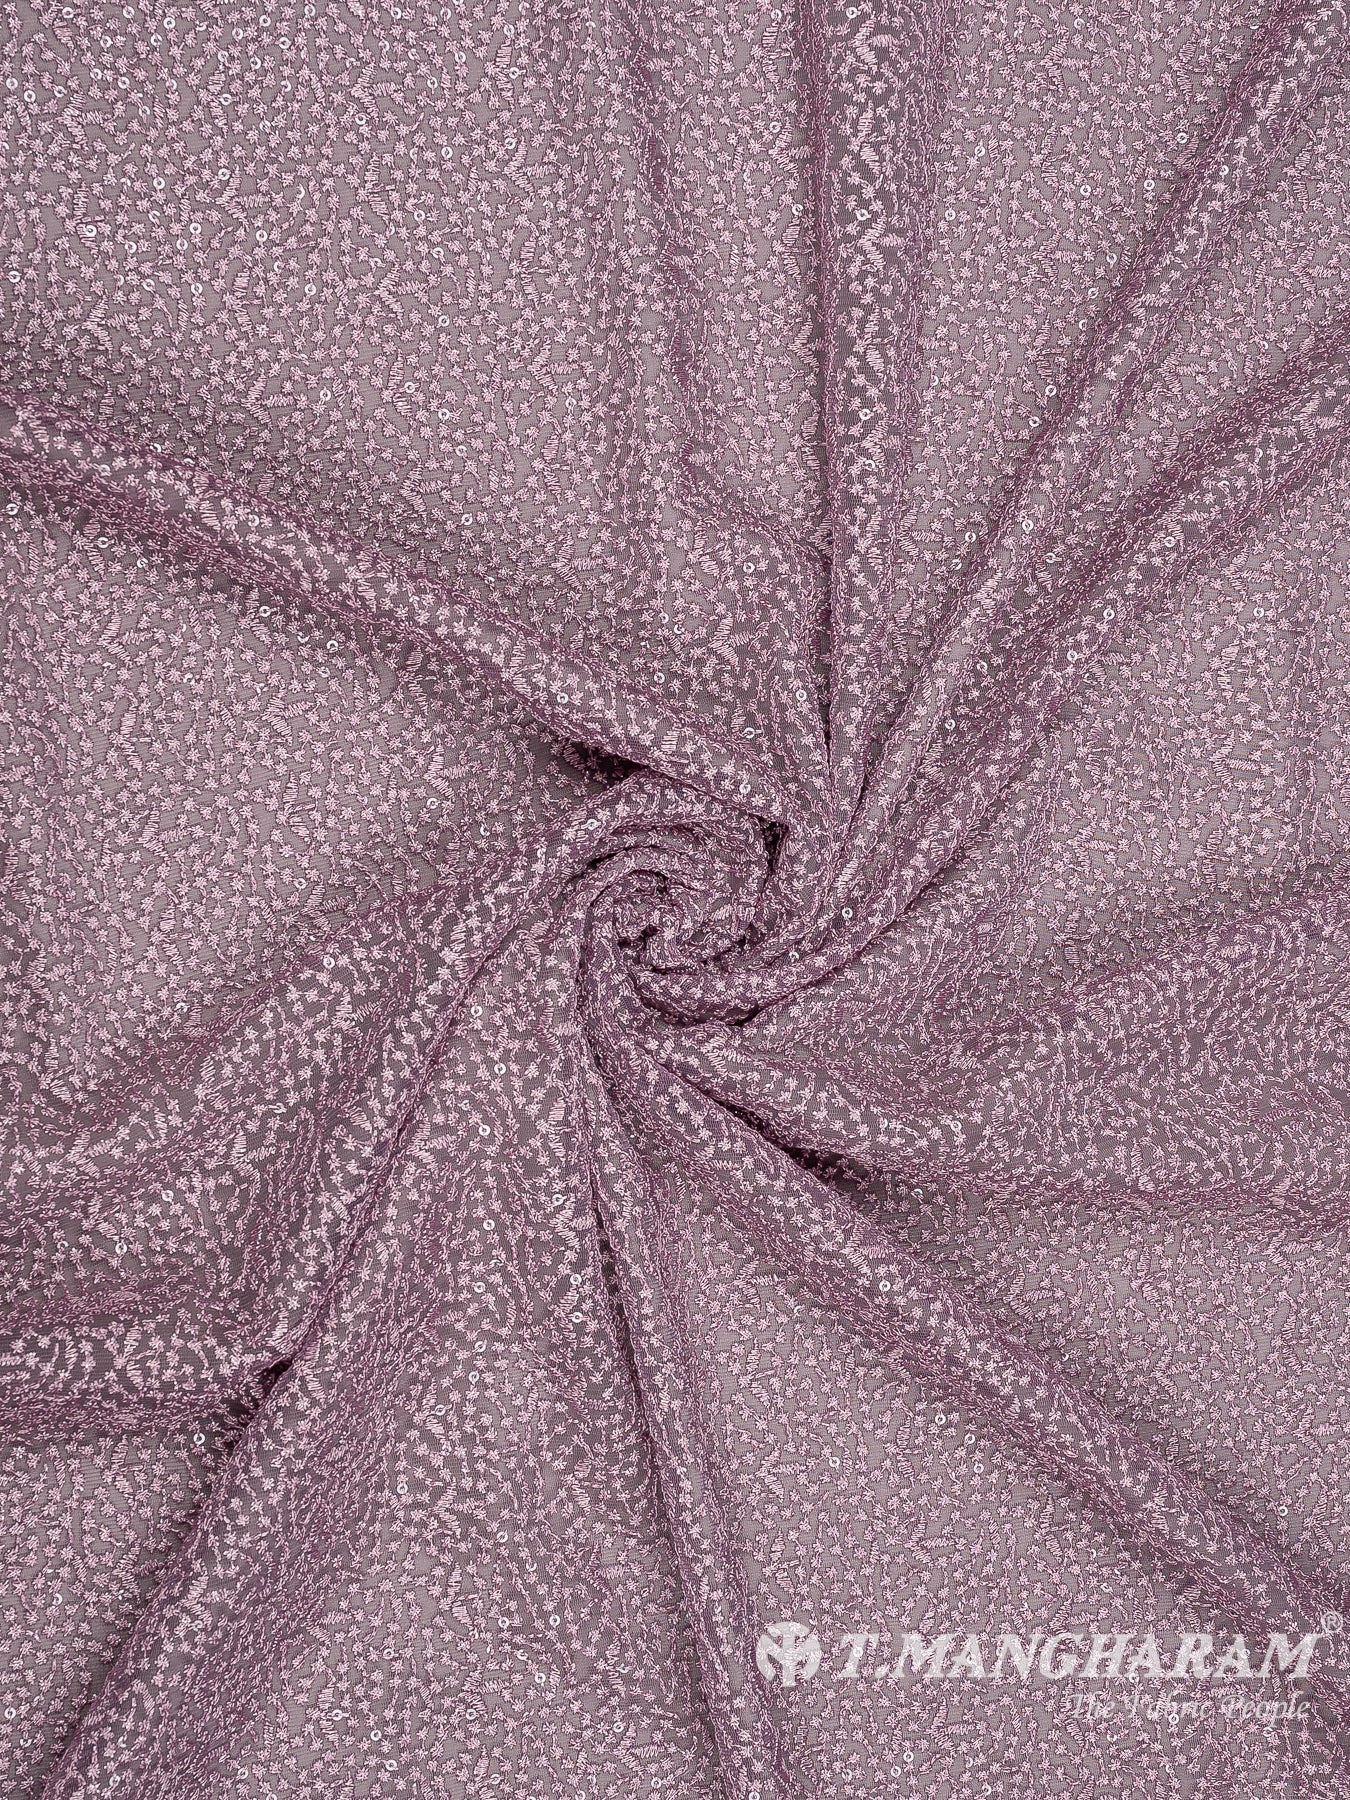 Violet Net Fabric - EB6593 view-1